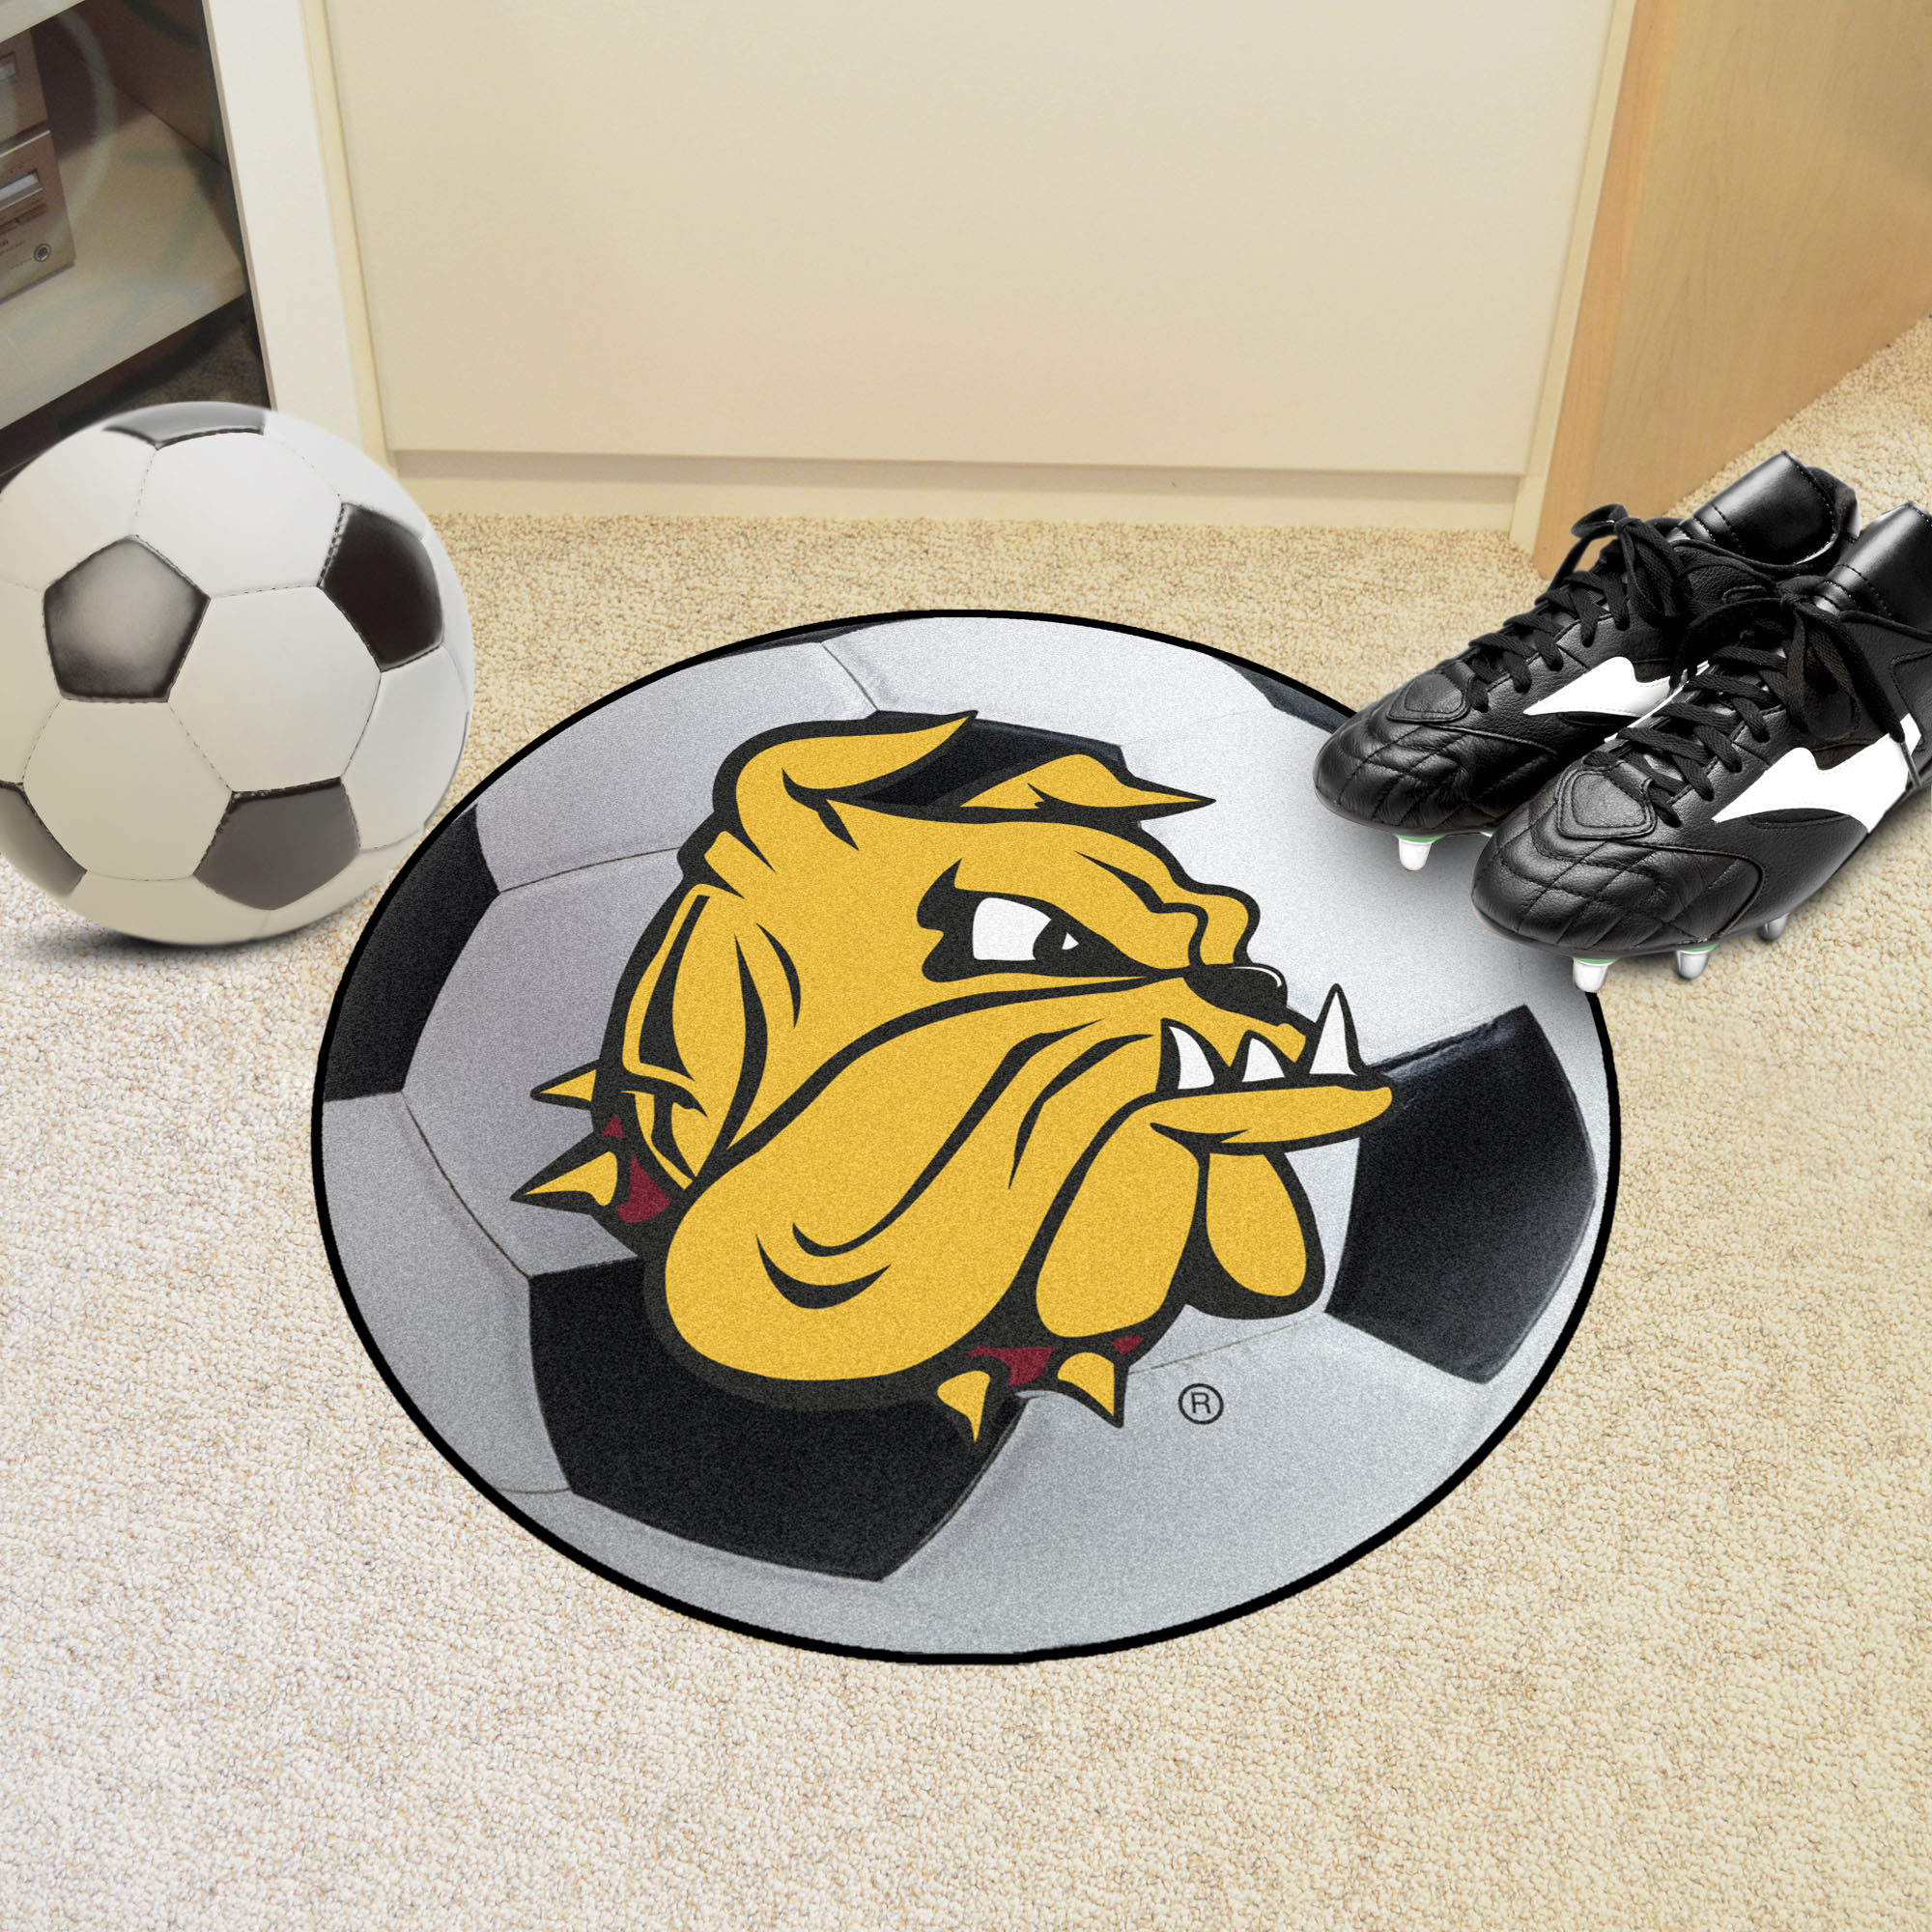 University of Duluth Duluth Ball Shaped Area Rugs (Ball Shaped Area Rugs: Soccer Ball)